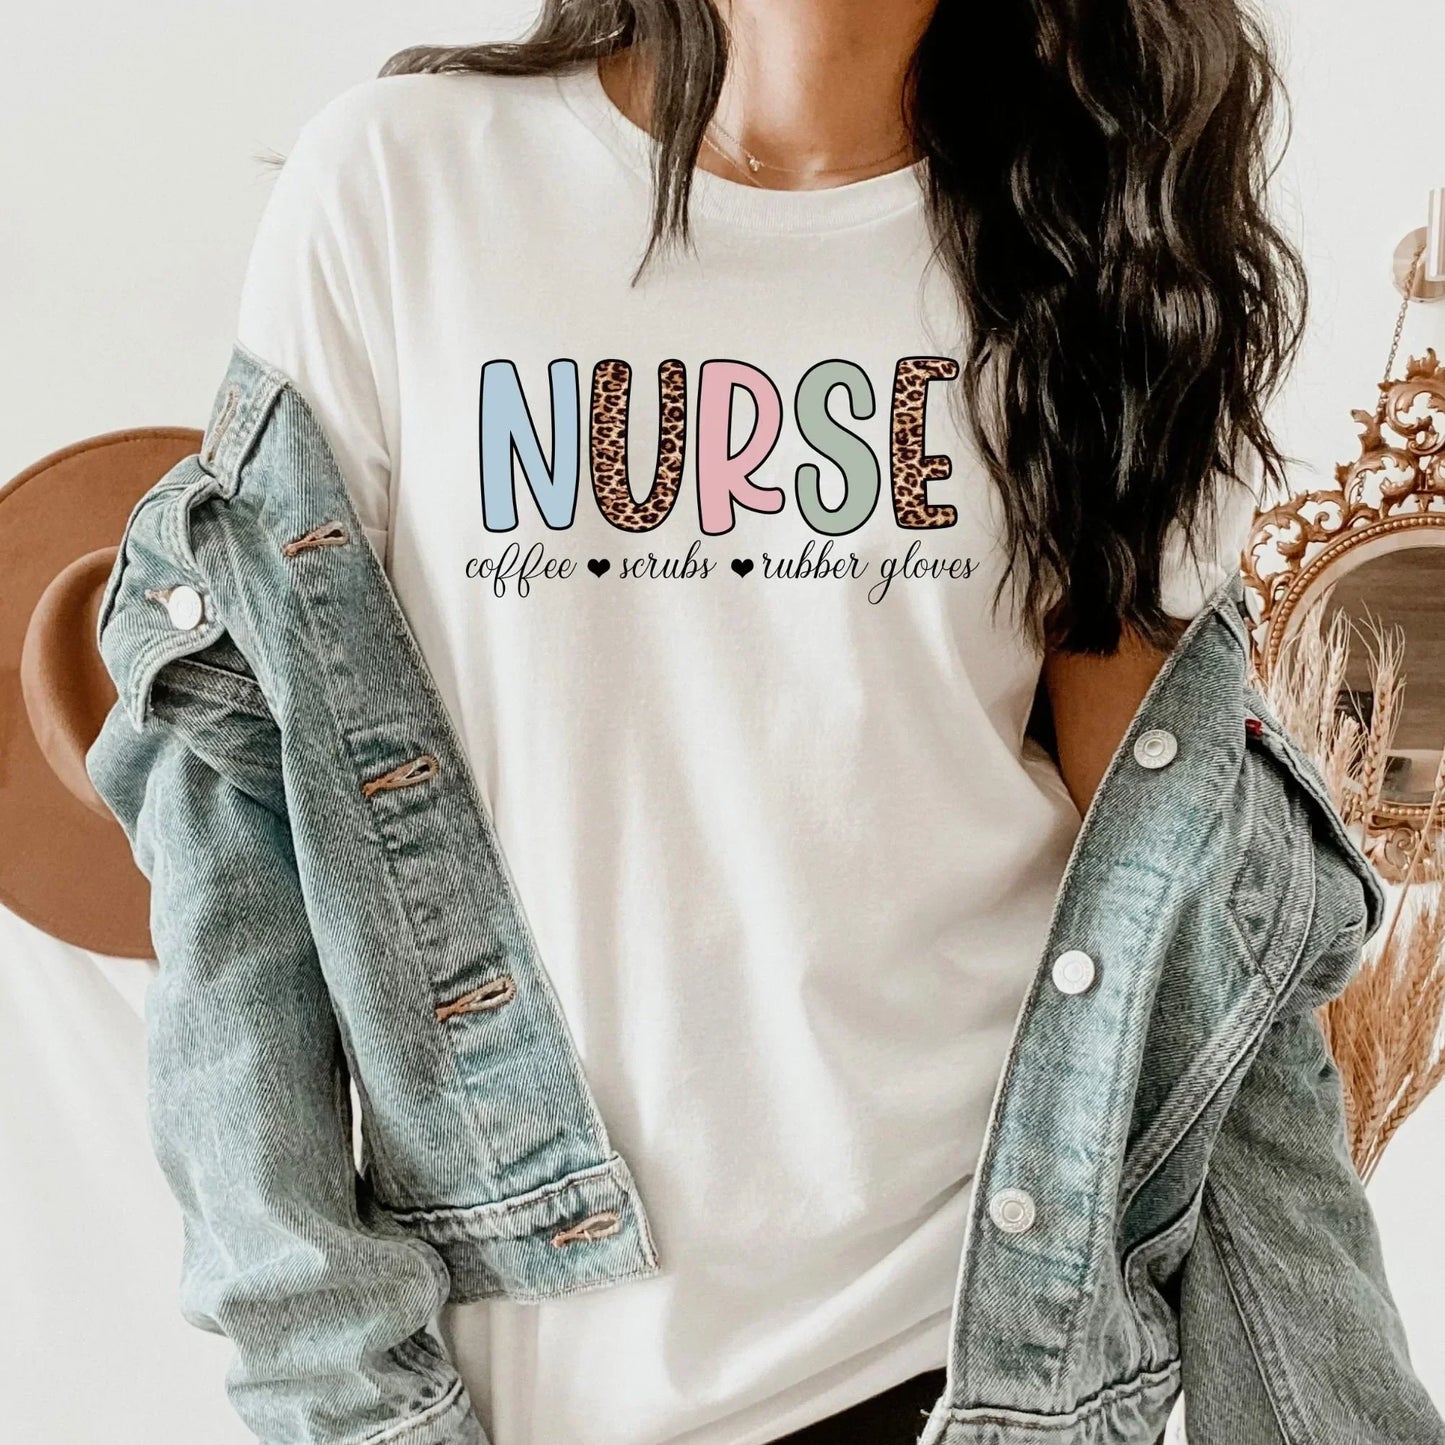 Registered Nurse Shirt, Nursing Student, Pediatric Nurse, ER Nurse Sweatshirt, Nurse Gift, Nurse Hoodie,Funny Nurse Shirt,Nurse Practitioner